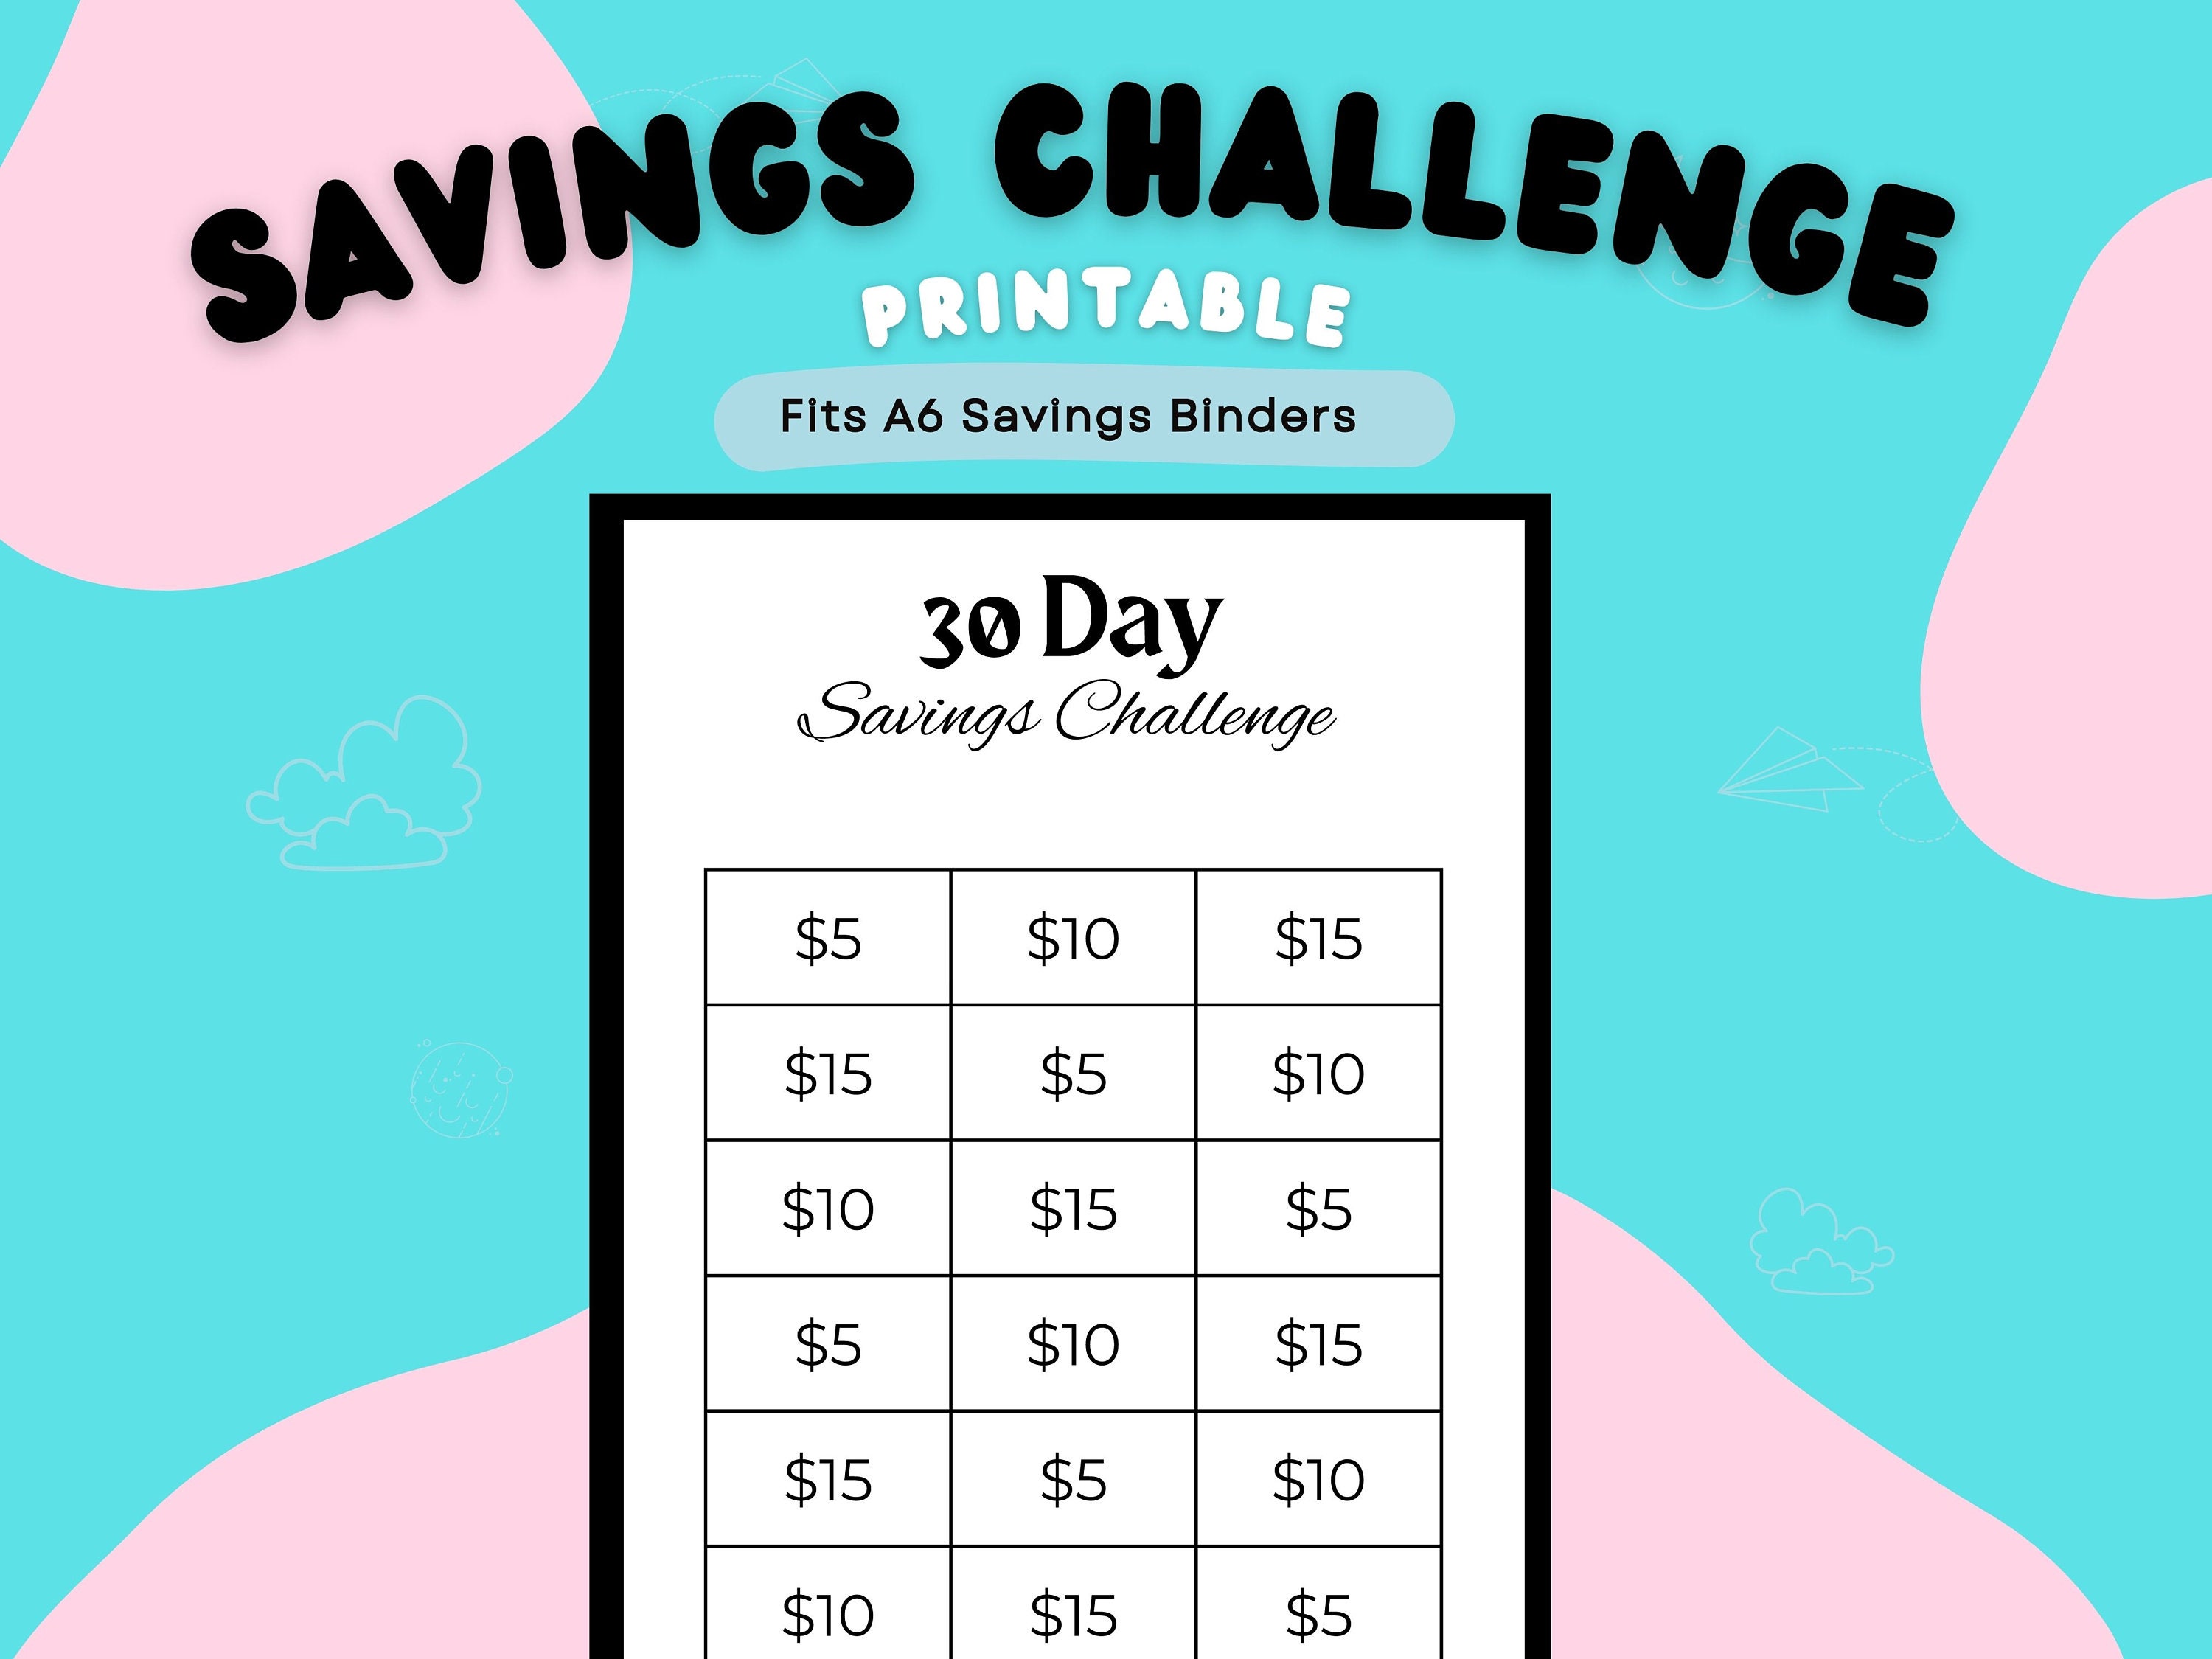 Easy 30 Day Money-Saving Envelope Challenge - Budgeting for Bliss